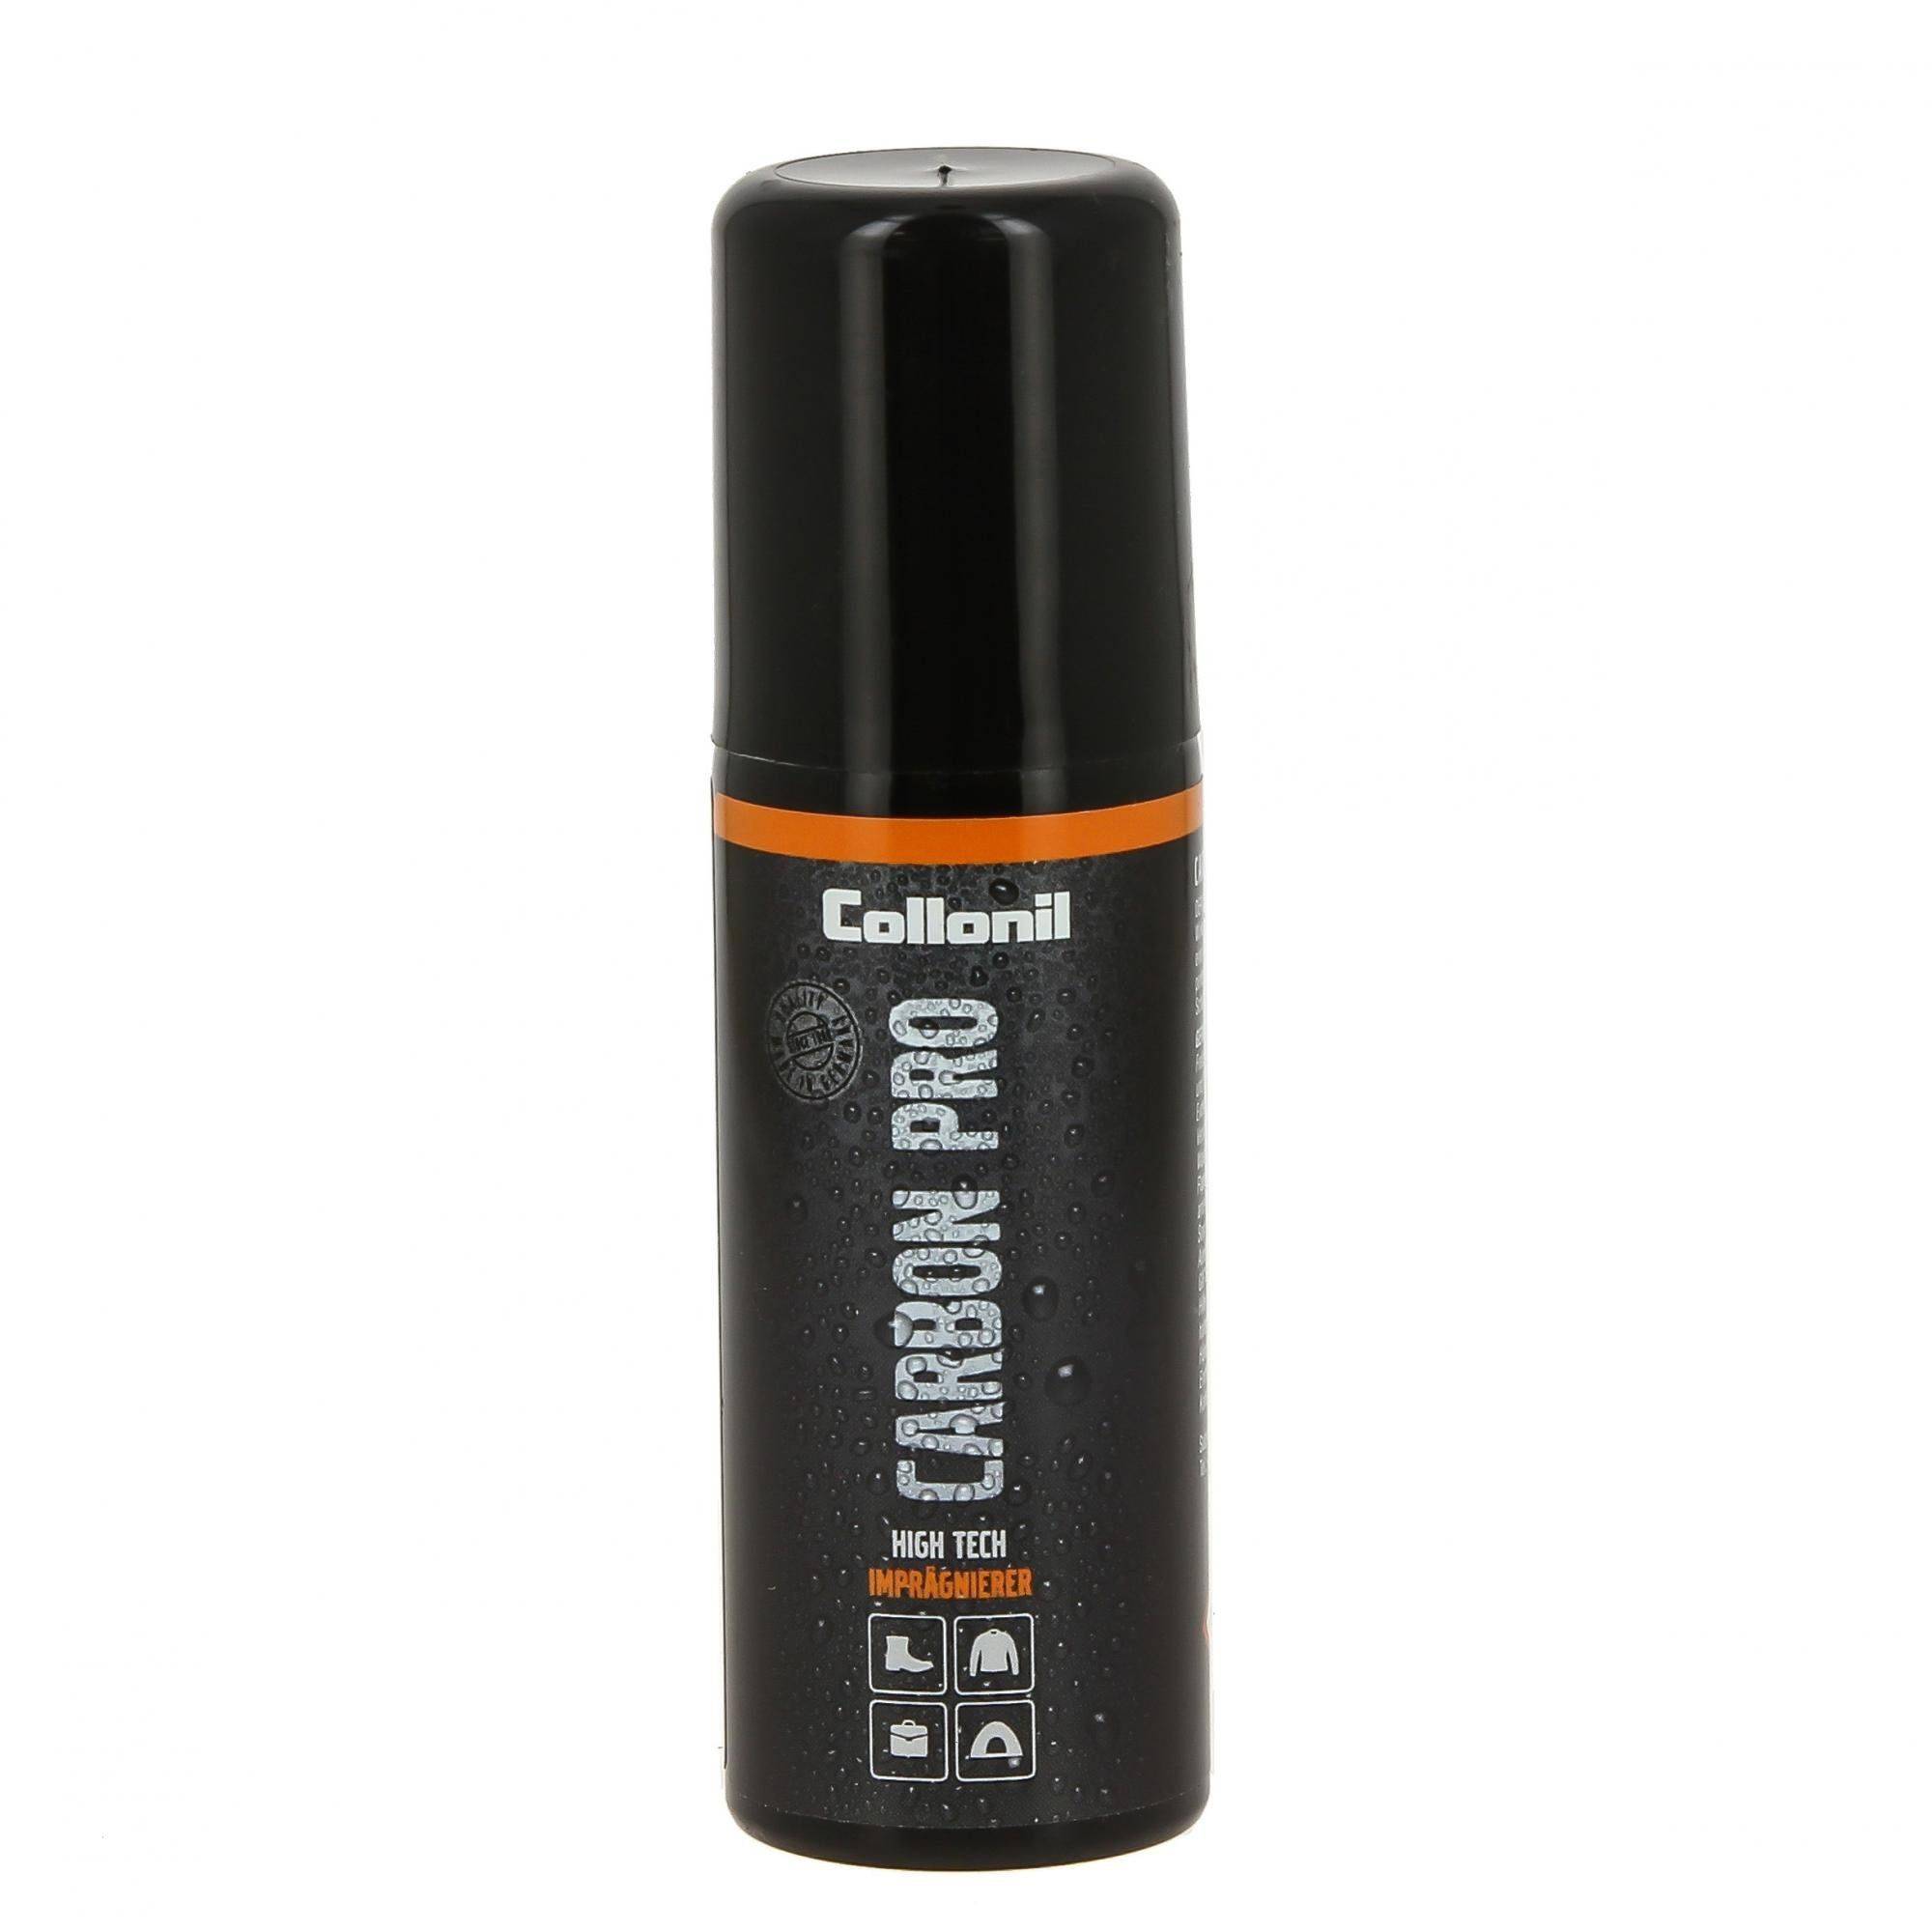 Протектор COLLONIL Carbon Pro 50 ml, влаго-и грязеотталкивающий спрей W100053, размер ONE SIZE - фото 1